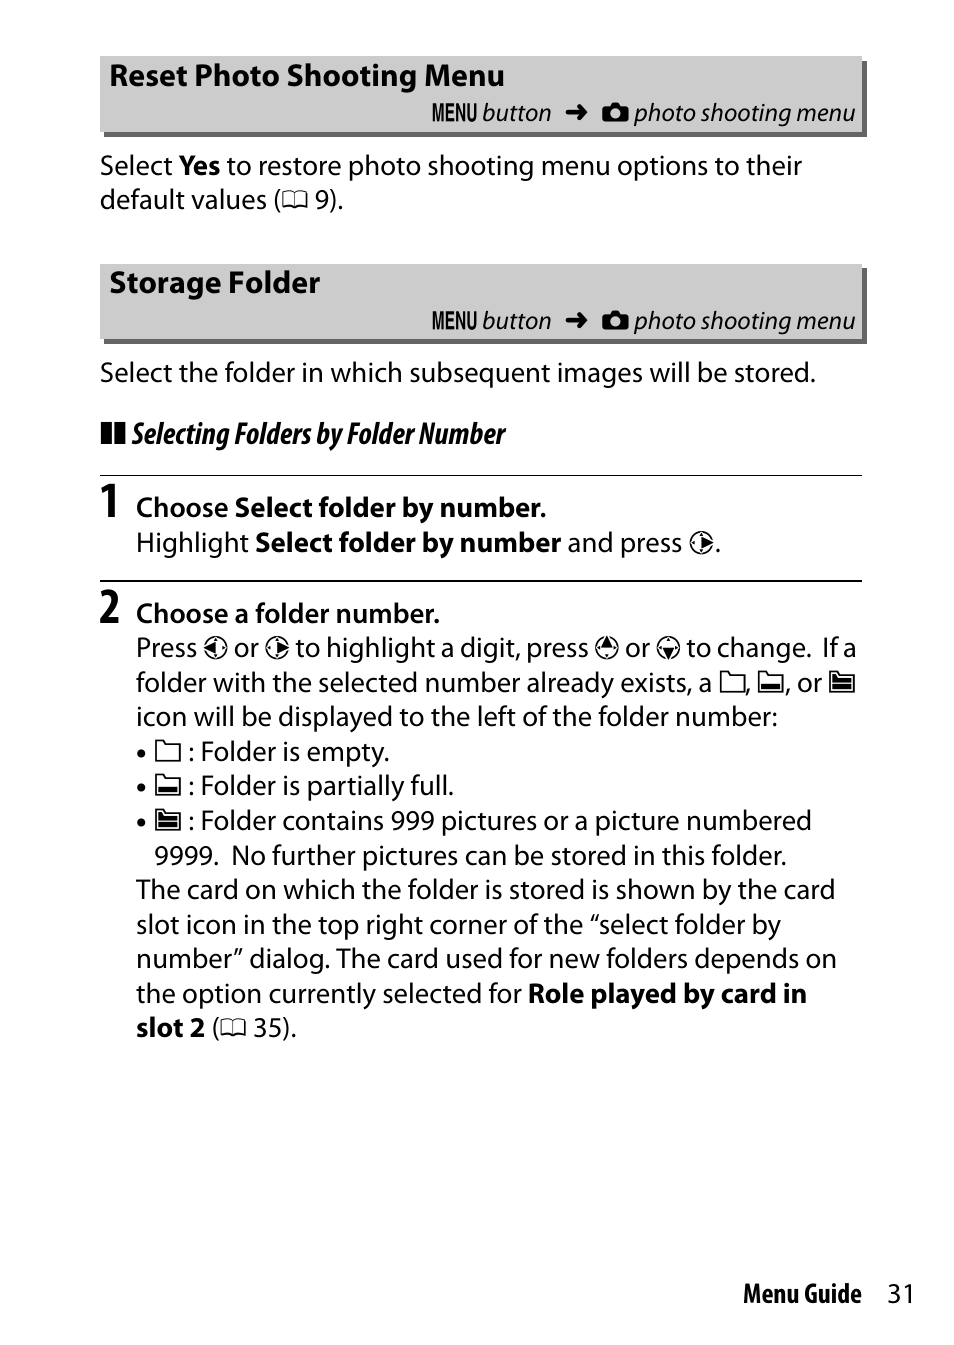 Reset photo shooting menu, Storage folder | Nikon D7200 body User Manual | Page 31 / 202